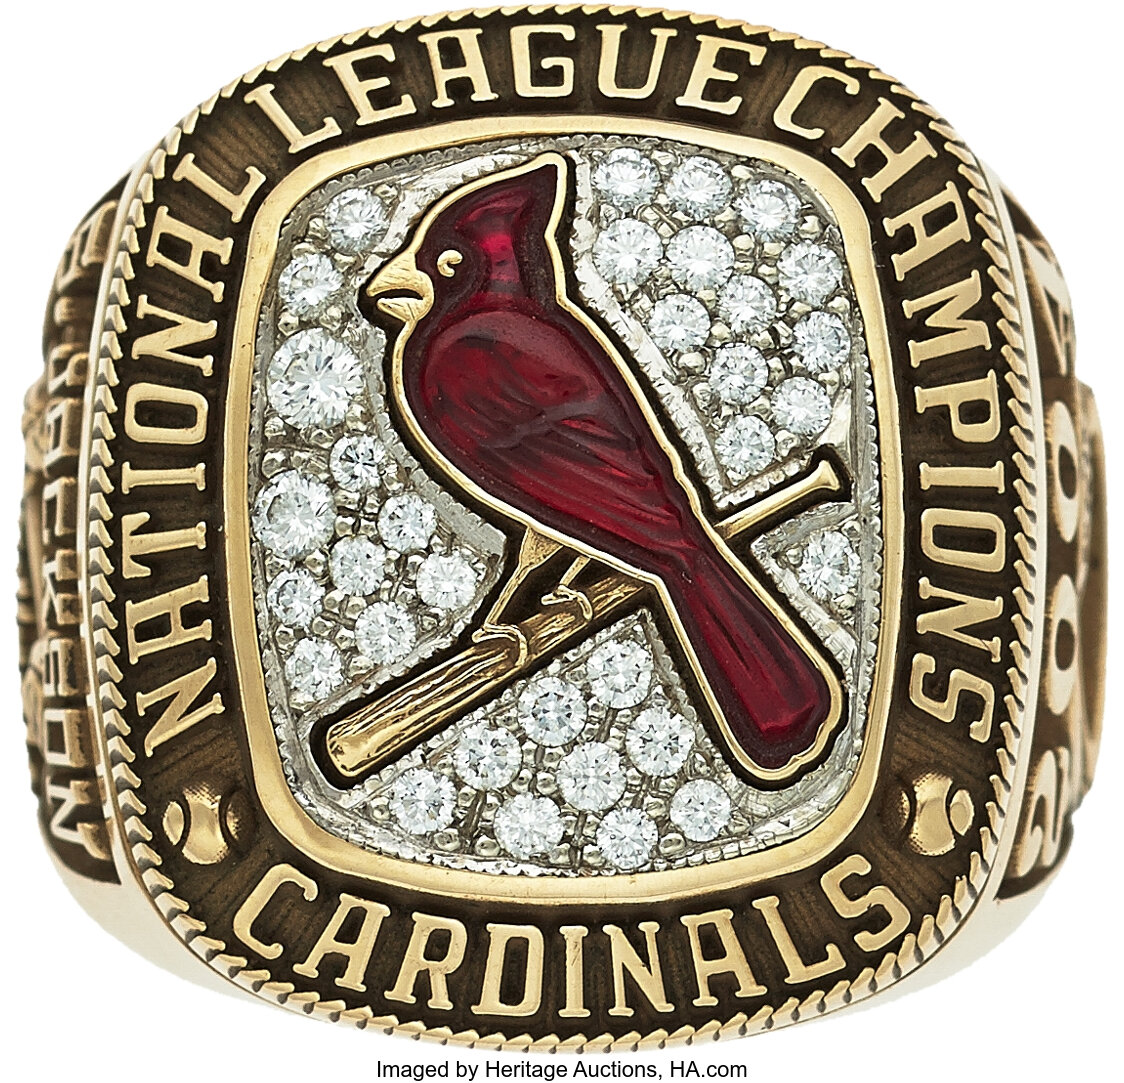 2011 St. Louis Cardinals World Series Ring Championship ring design